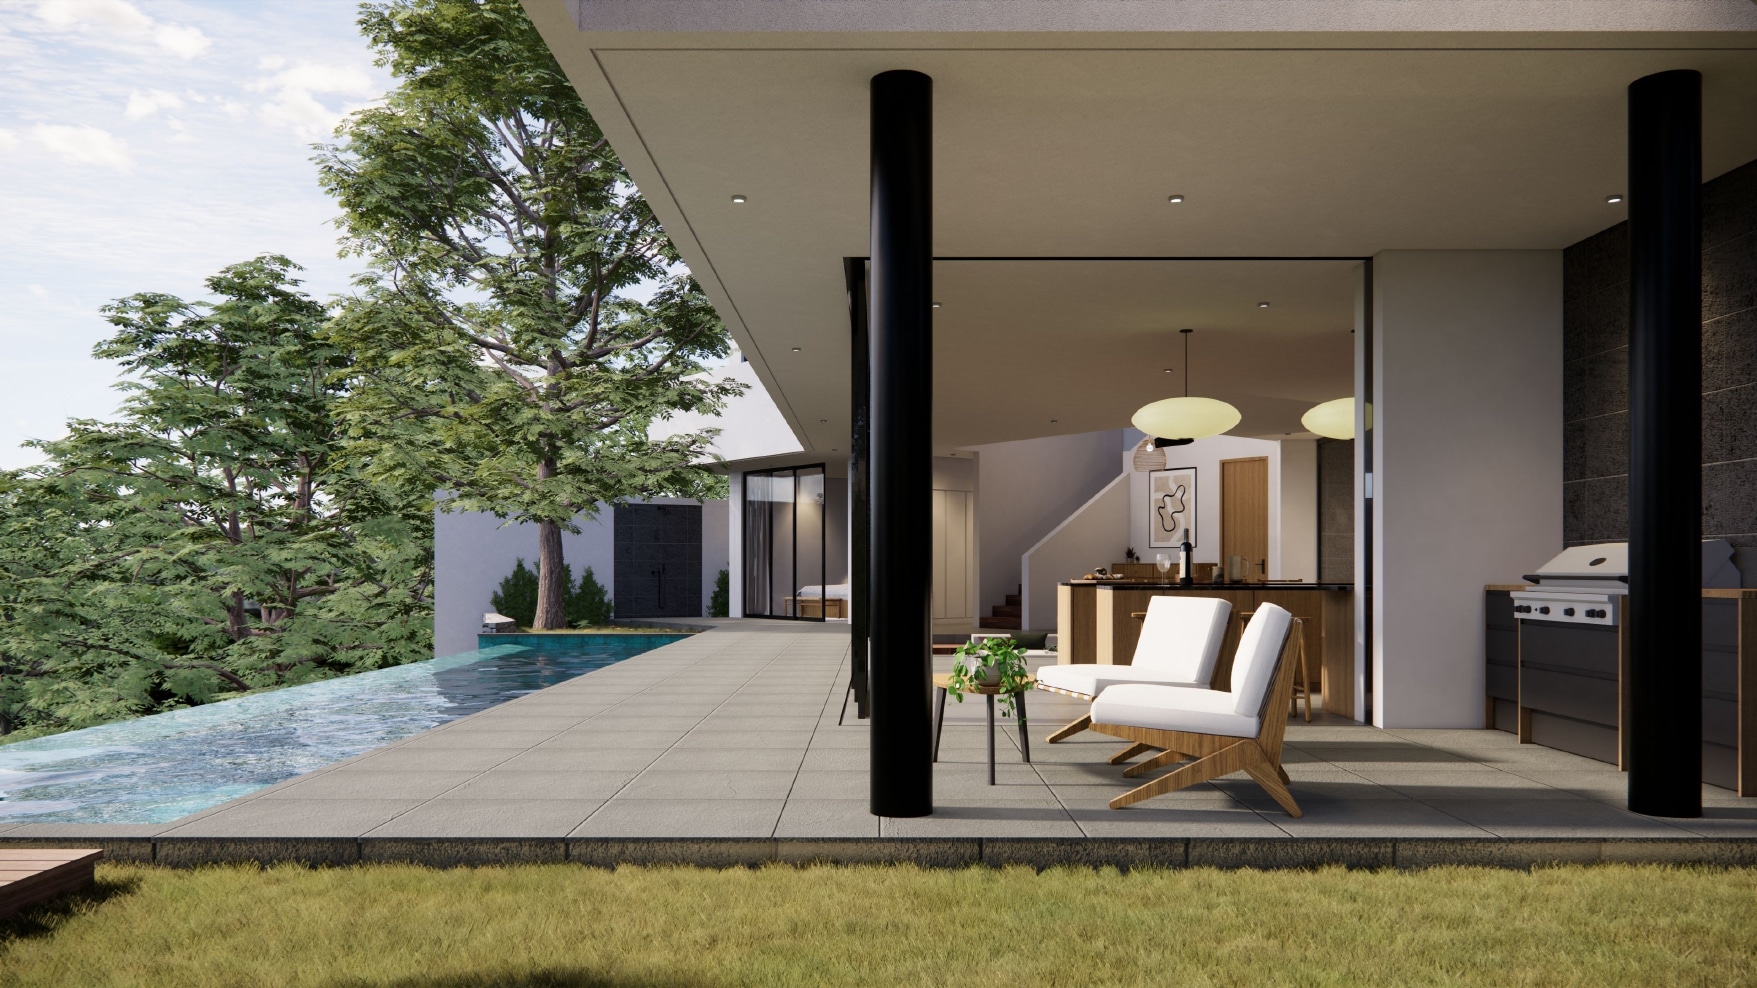 Design Assembly - Anyar 5 Villa - Bali Architect - Interior Design - Bali Villa - Living Room - Open Barbecue - Wall Facade - Swimming Pool